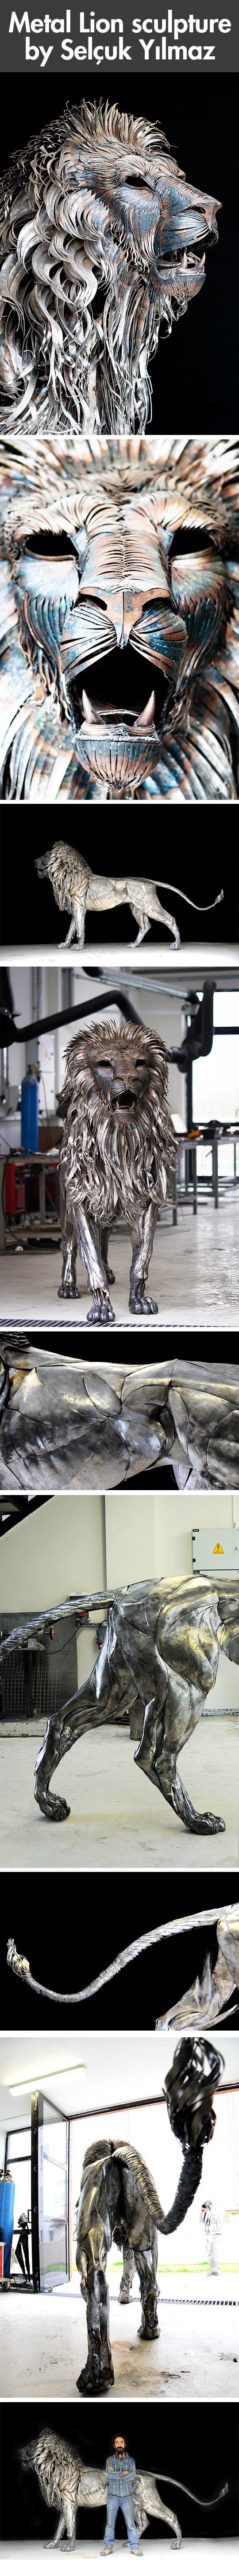 Metal+lion+sculpture.